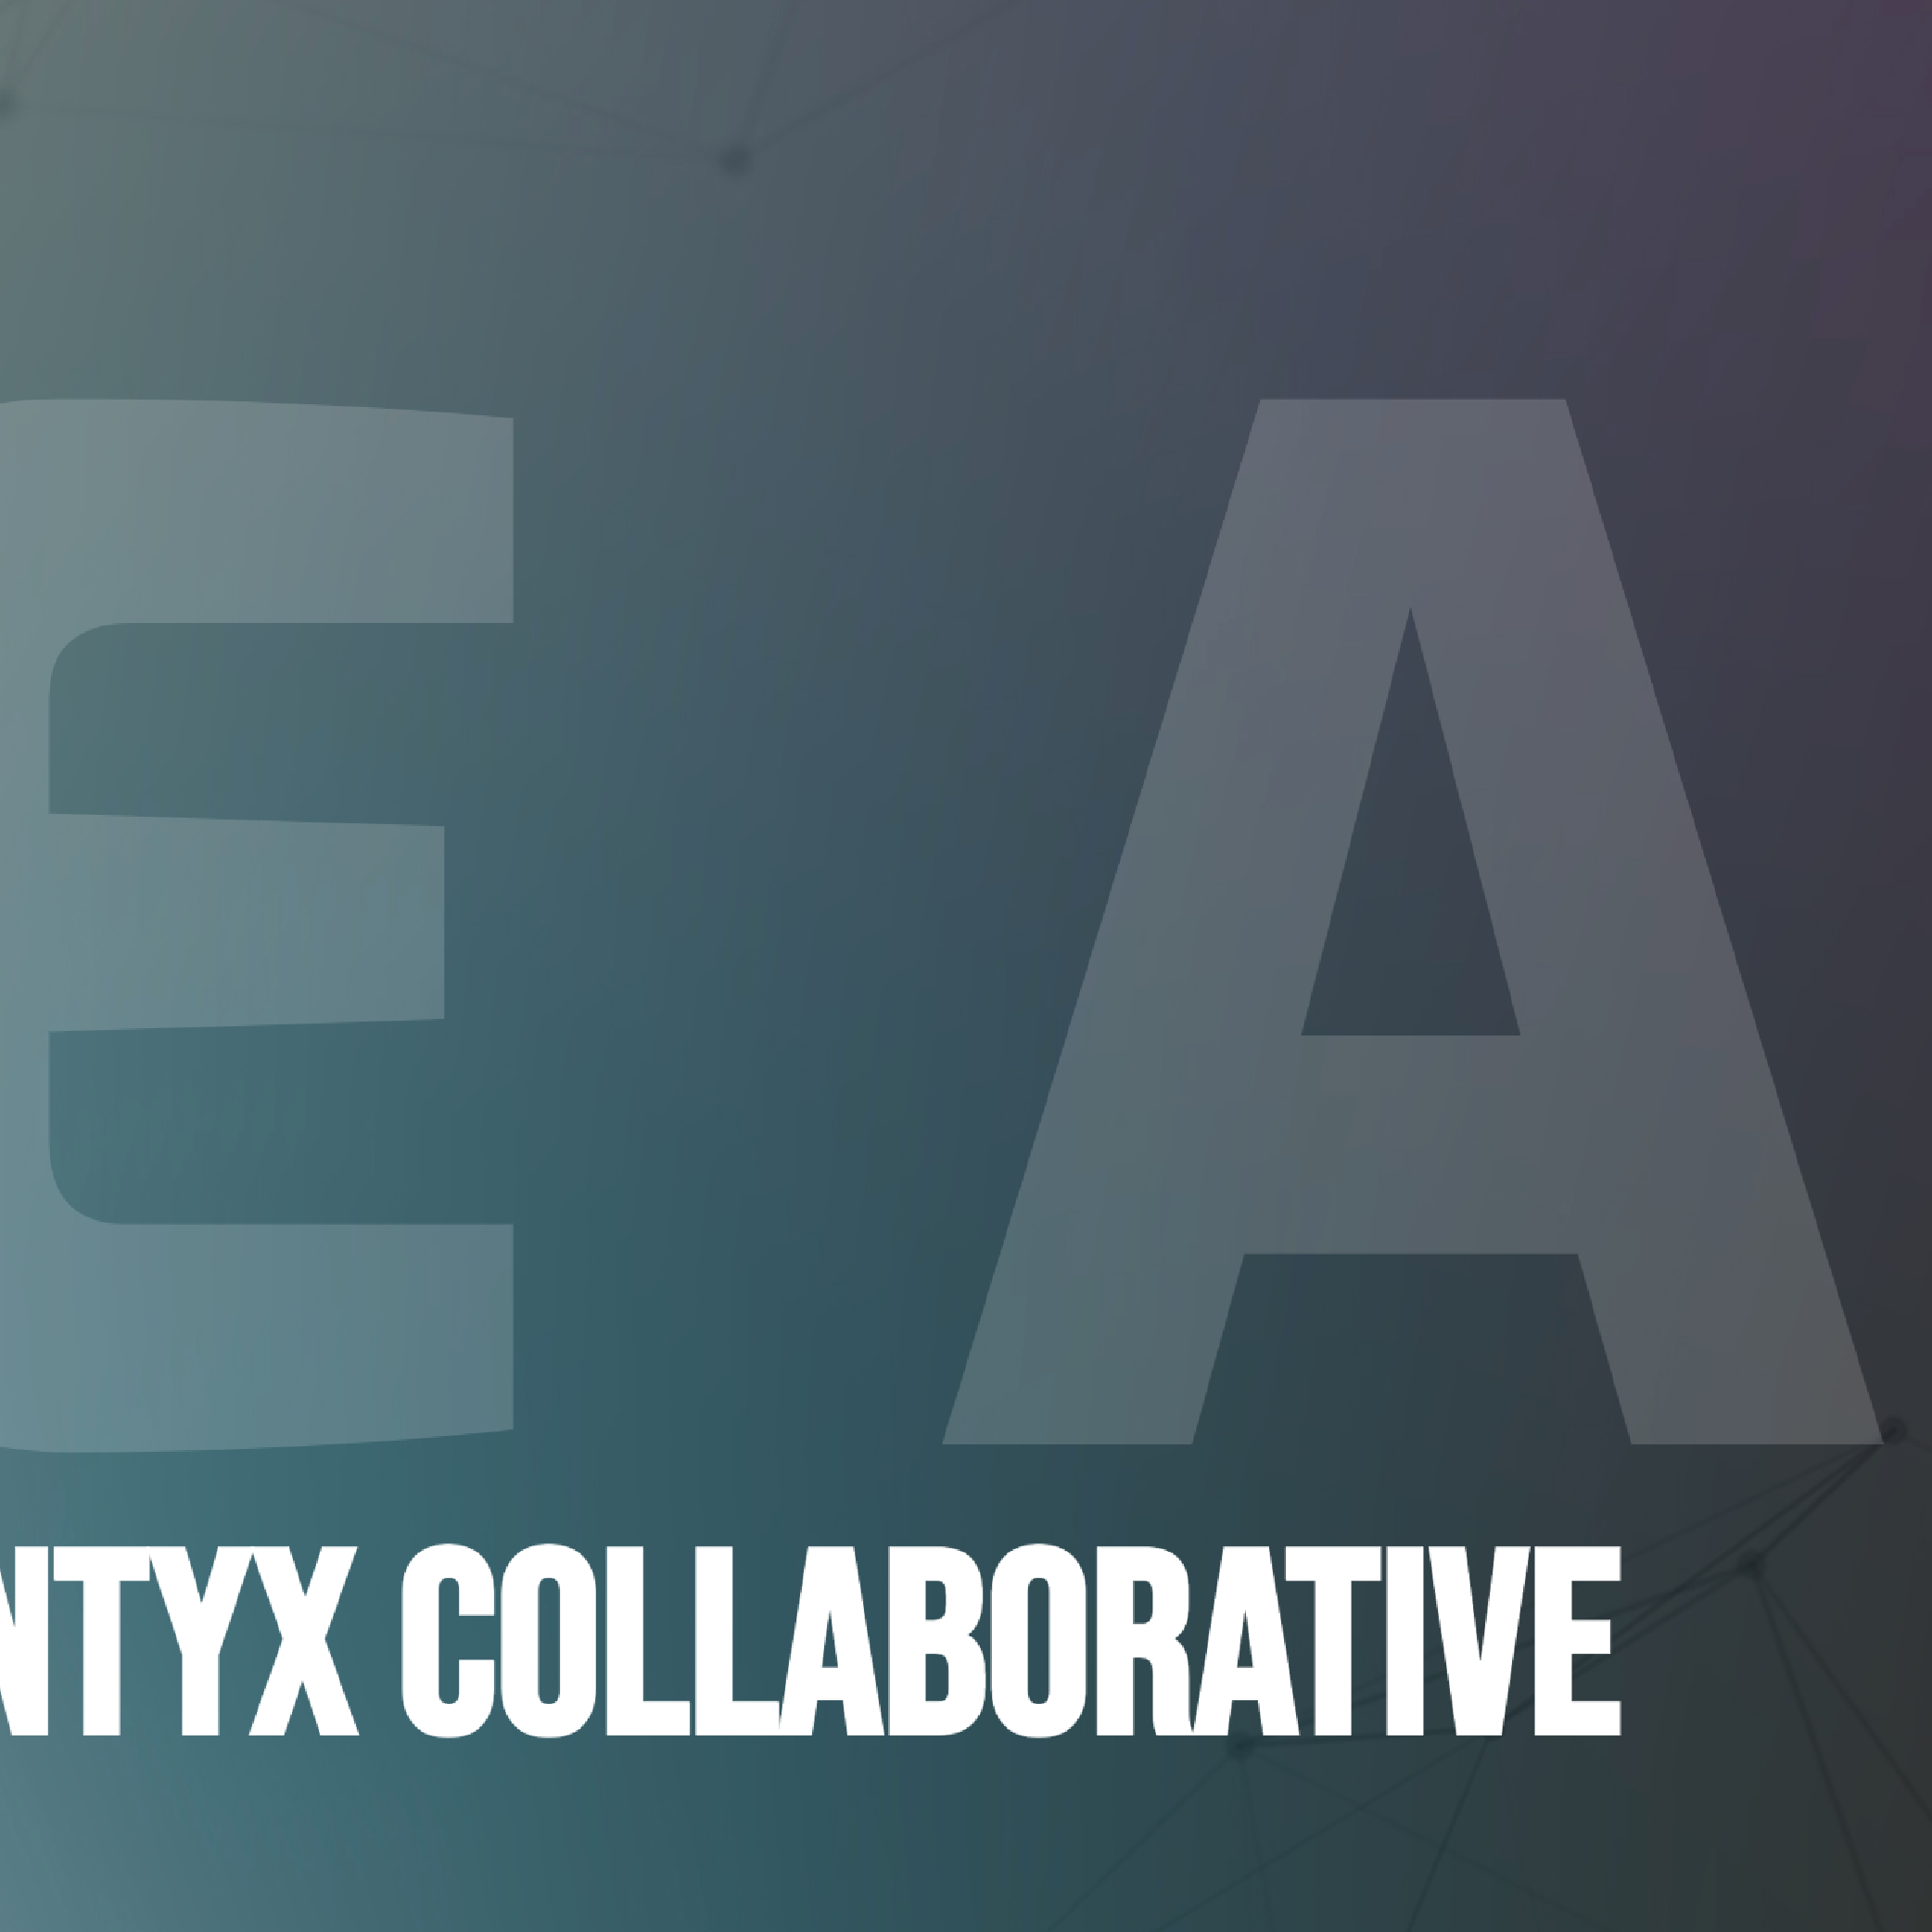 Pontyx Collaborative - Agency / Web3